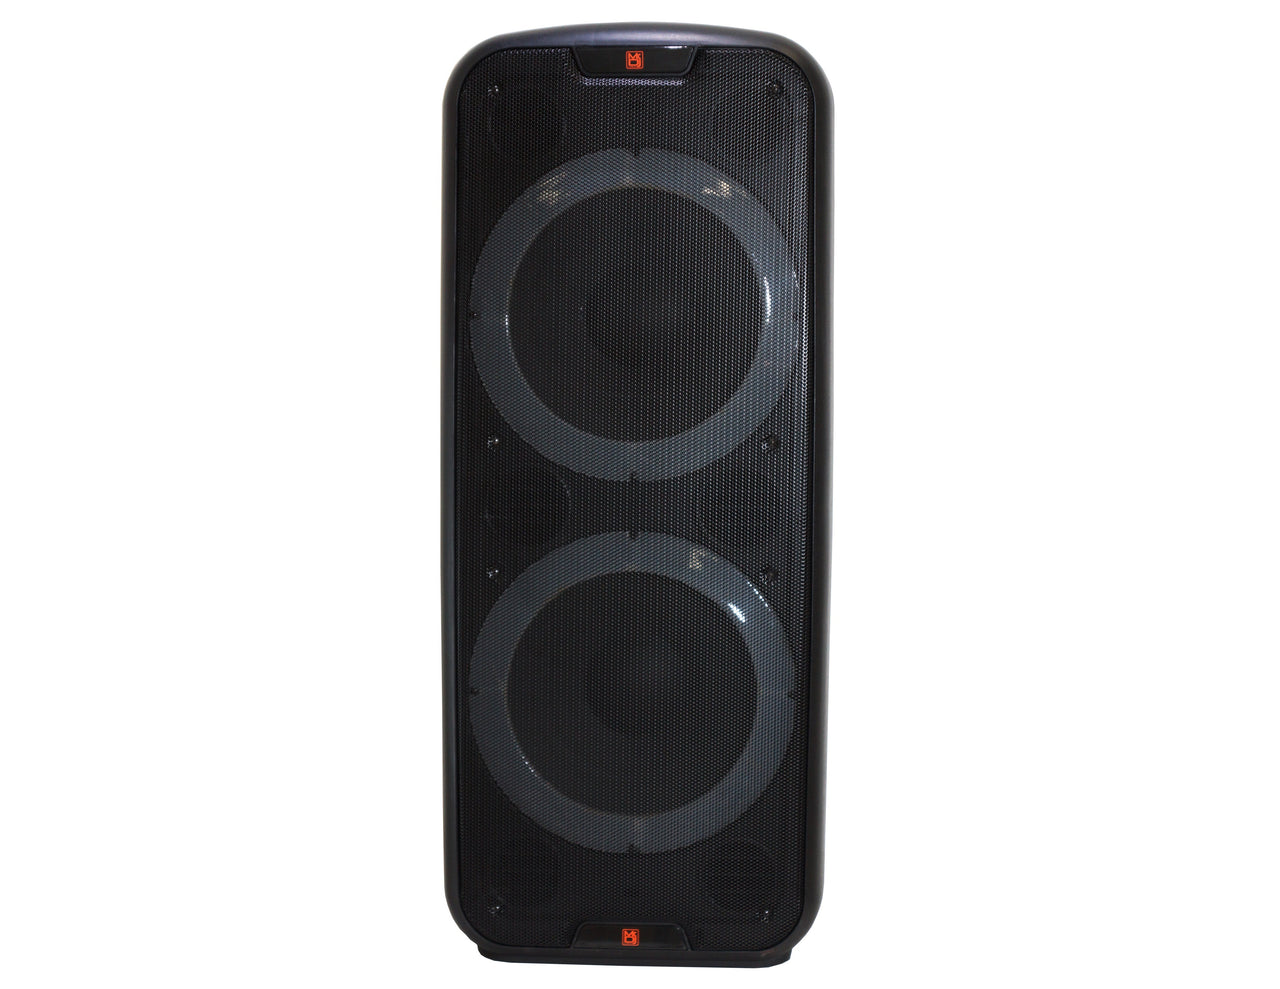 MR DJ PBX6500LED Professional Dual 15” 3-Way Full-Range Powered/Active DJ PA Multipurpose Live Sound Bluetooth Loudspeaker